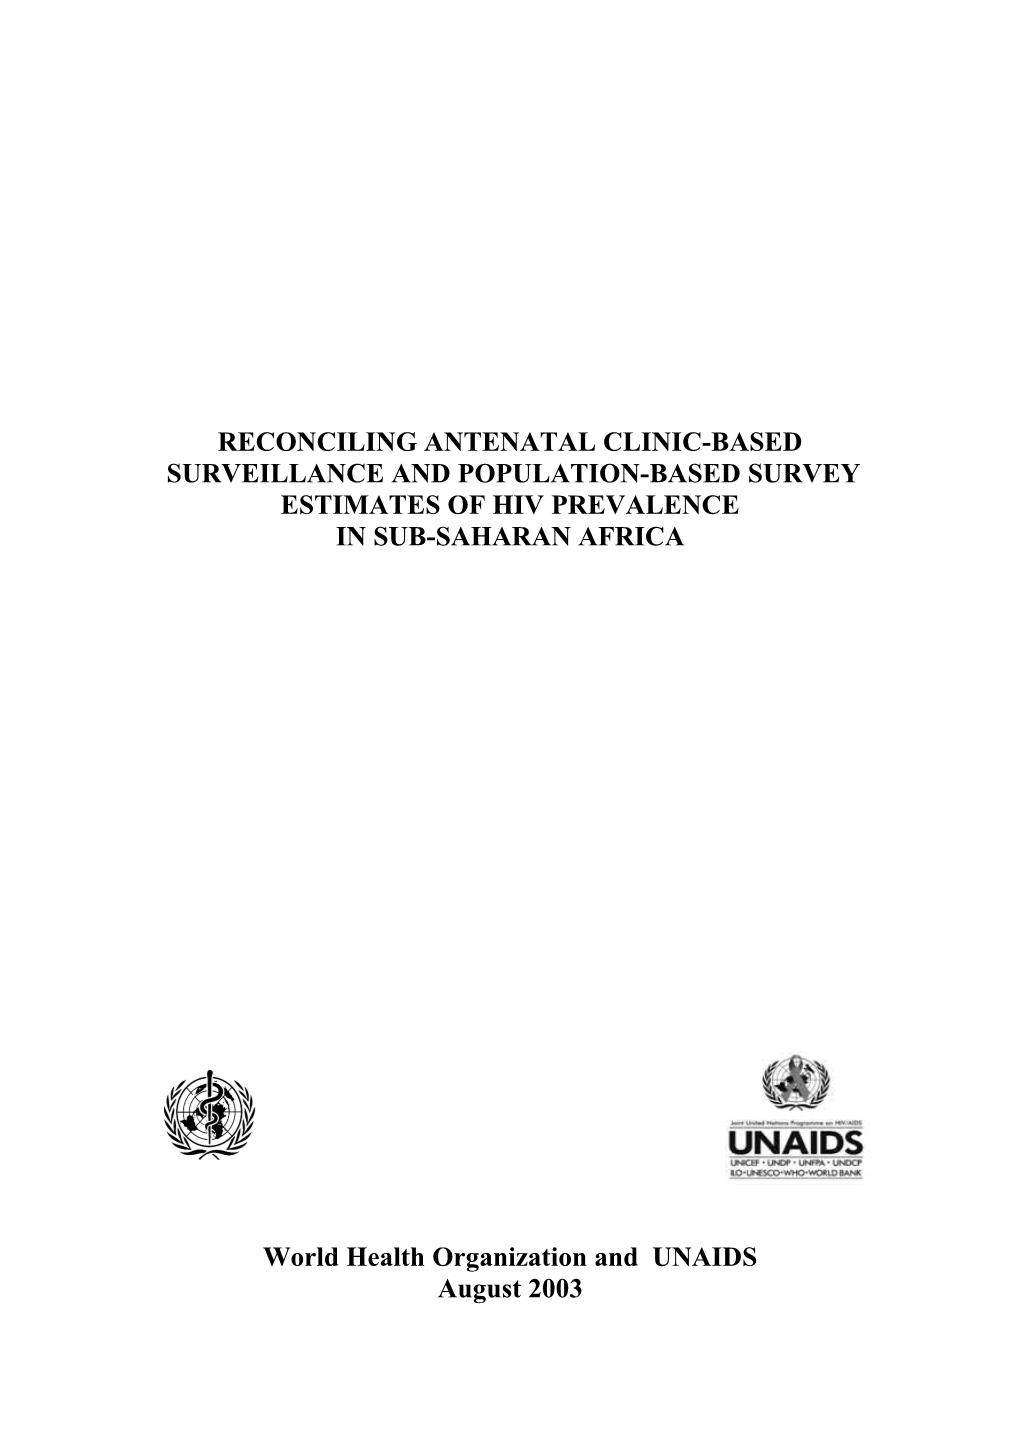 HIV Estimates: Reconciling ANC Surveillance and Population Based Survey Estimates